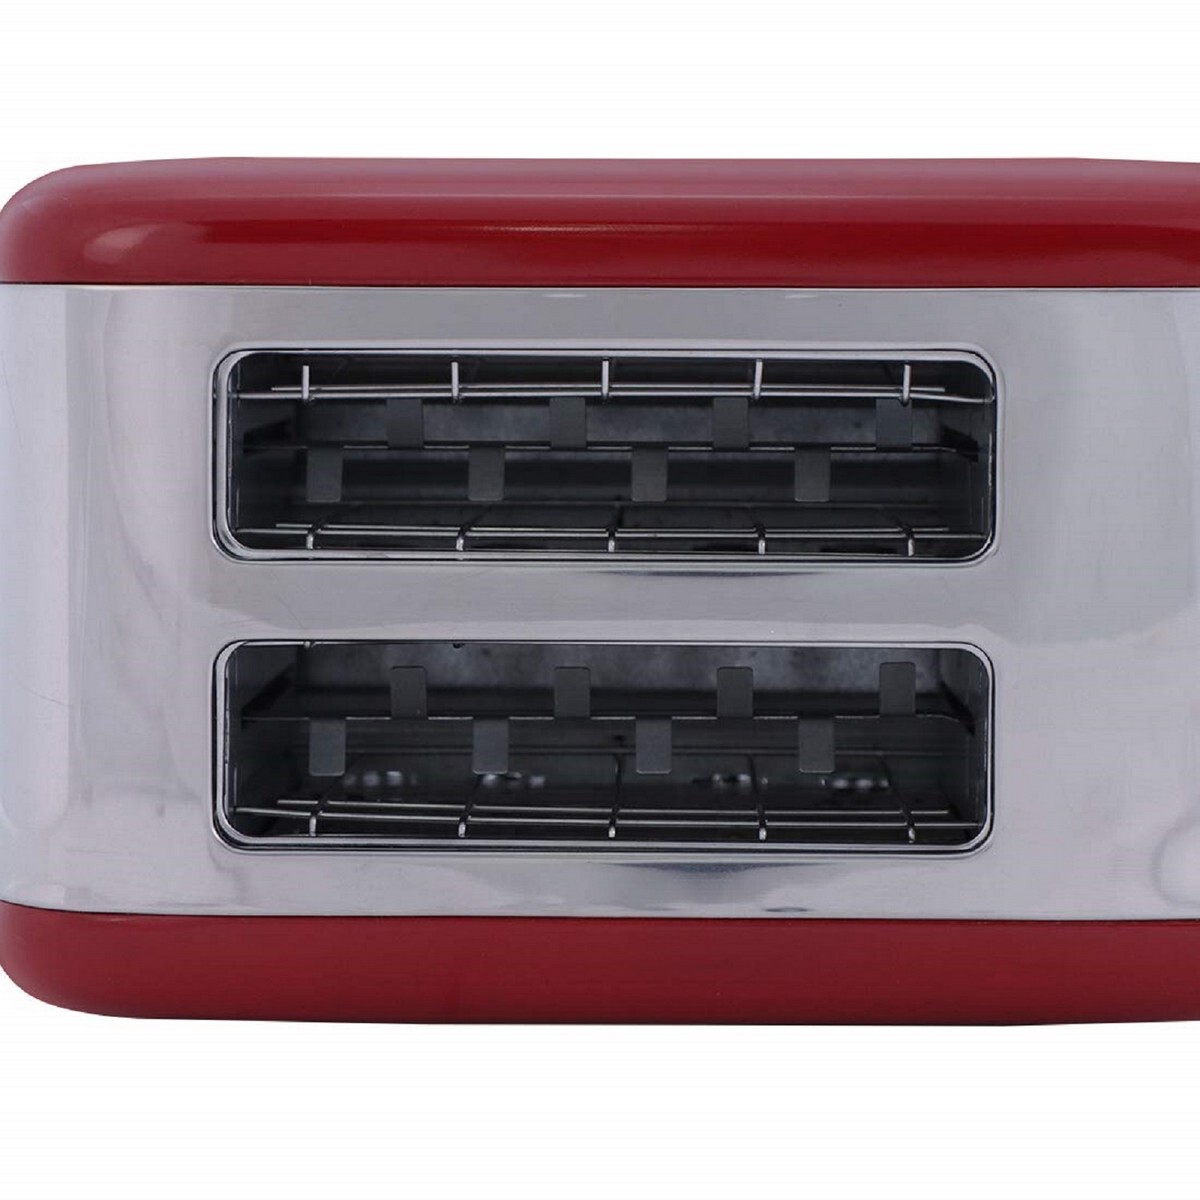 Wonderchef Crimson Edge Toaster 2 Slice